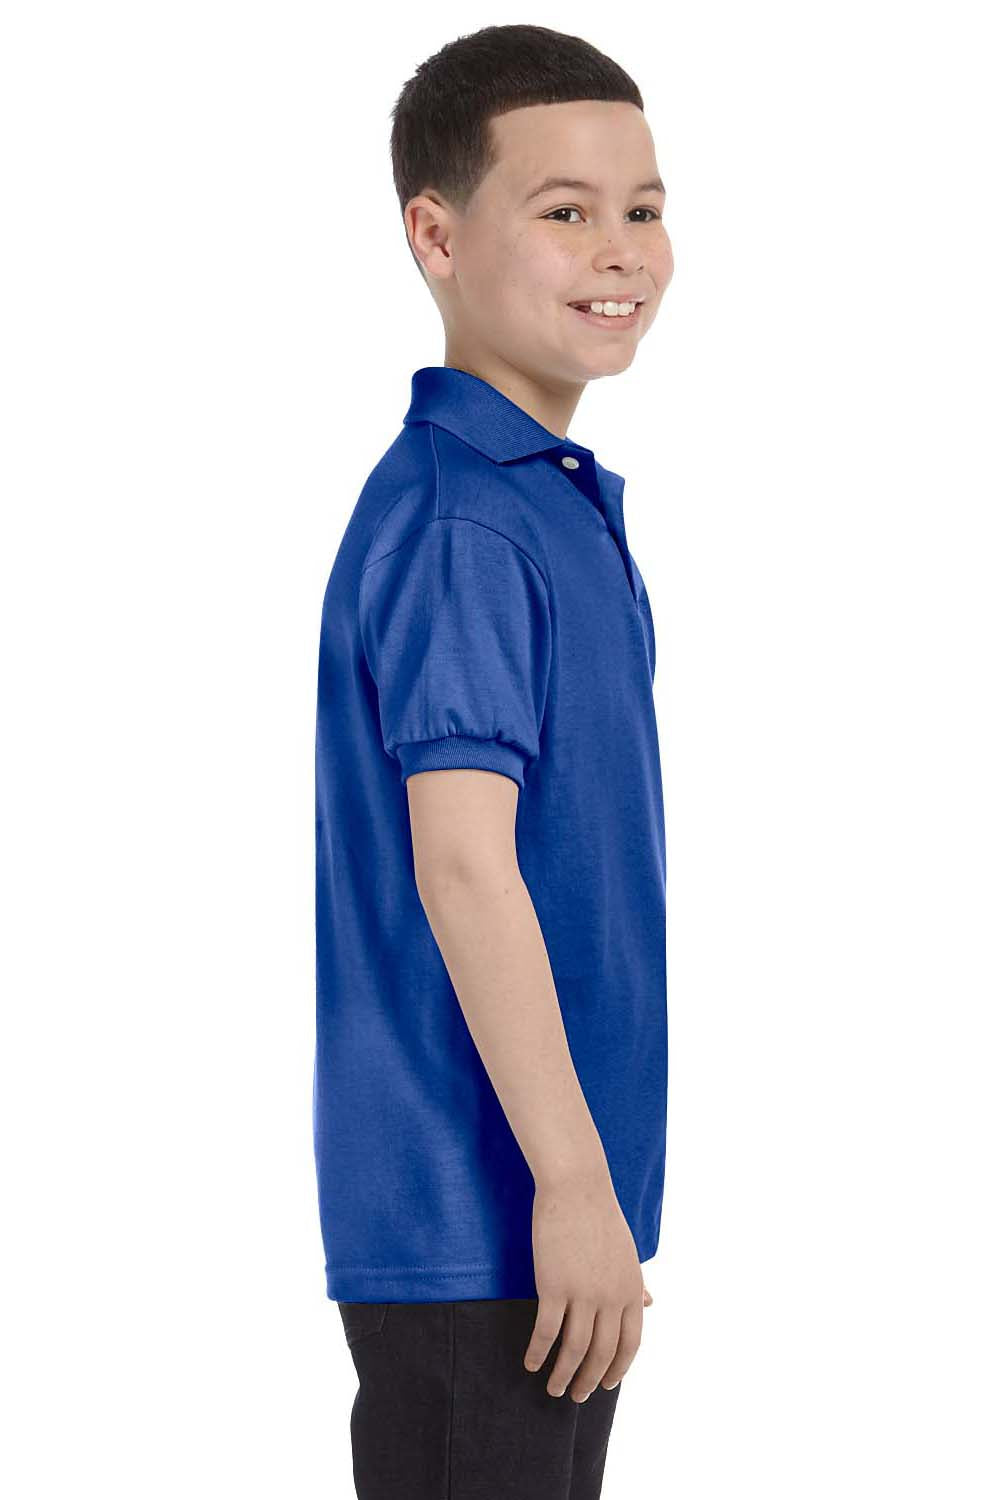 Hanes 054Y Youth EcoSmart Short Sleeve Polo Shirt Royal Blue Side